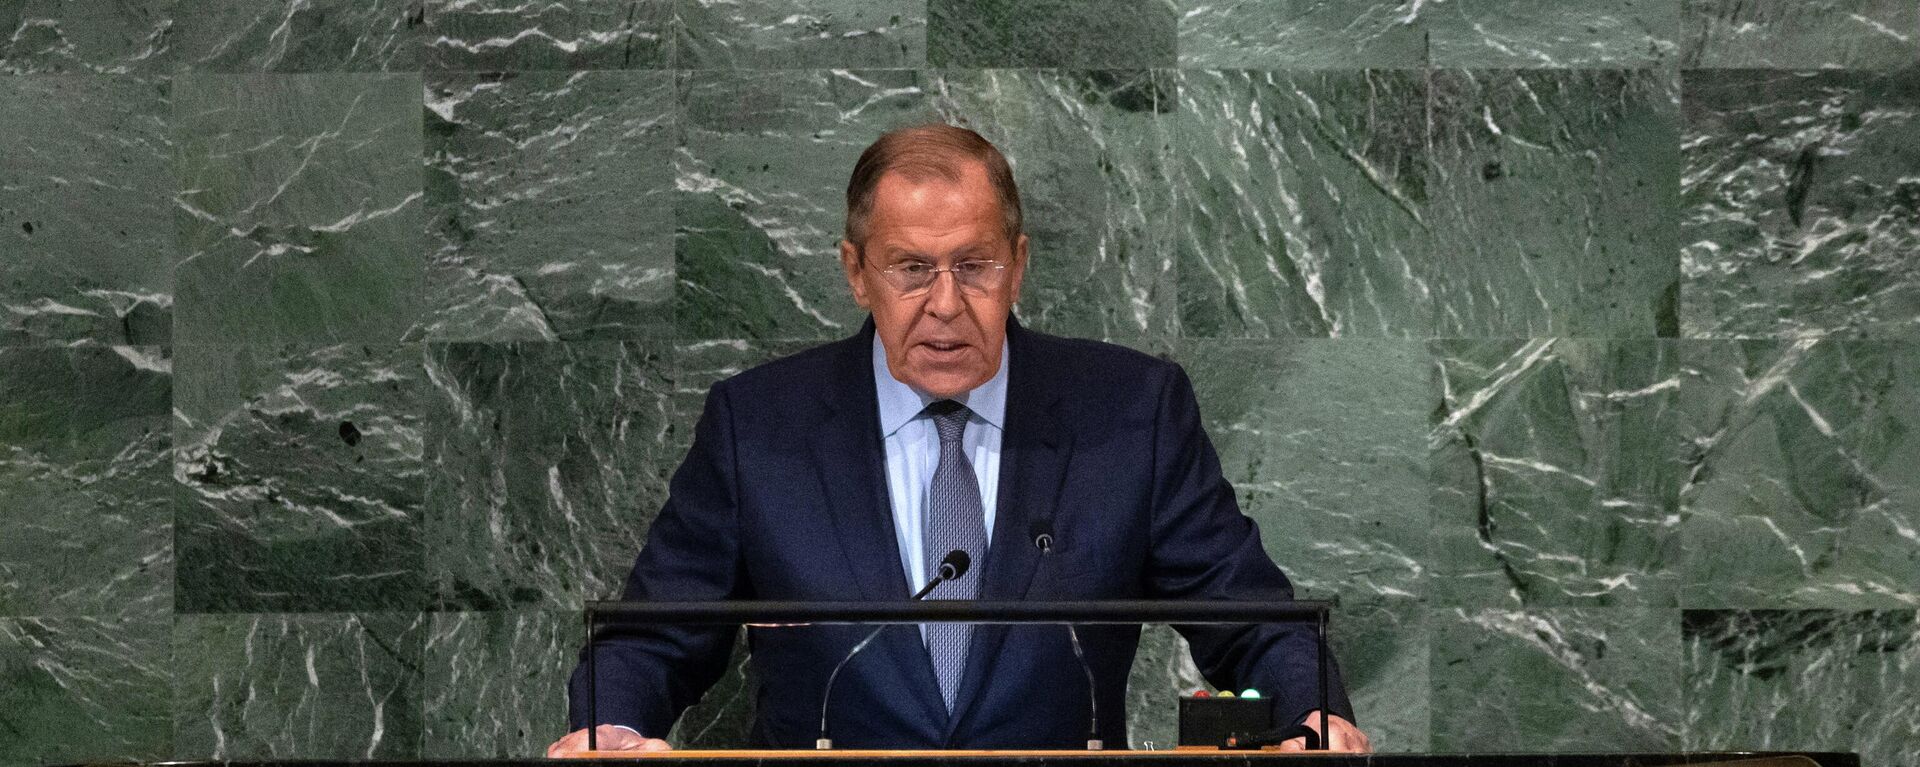 El ministro de Exteriores de Rusia, Serguéi Lavrov, durante la 77 Asamblea General de la ONU, el 24 de septiembre de 2022 - Sputnik Mundo, 1920, 24.09.2022